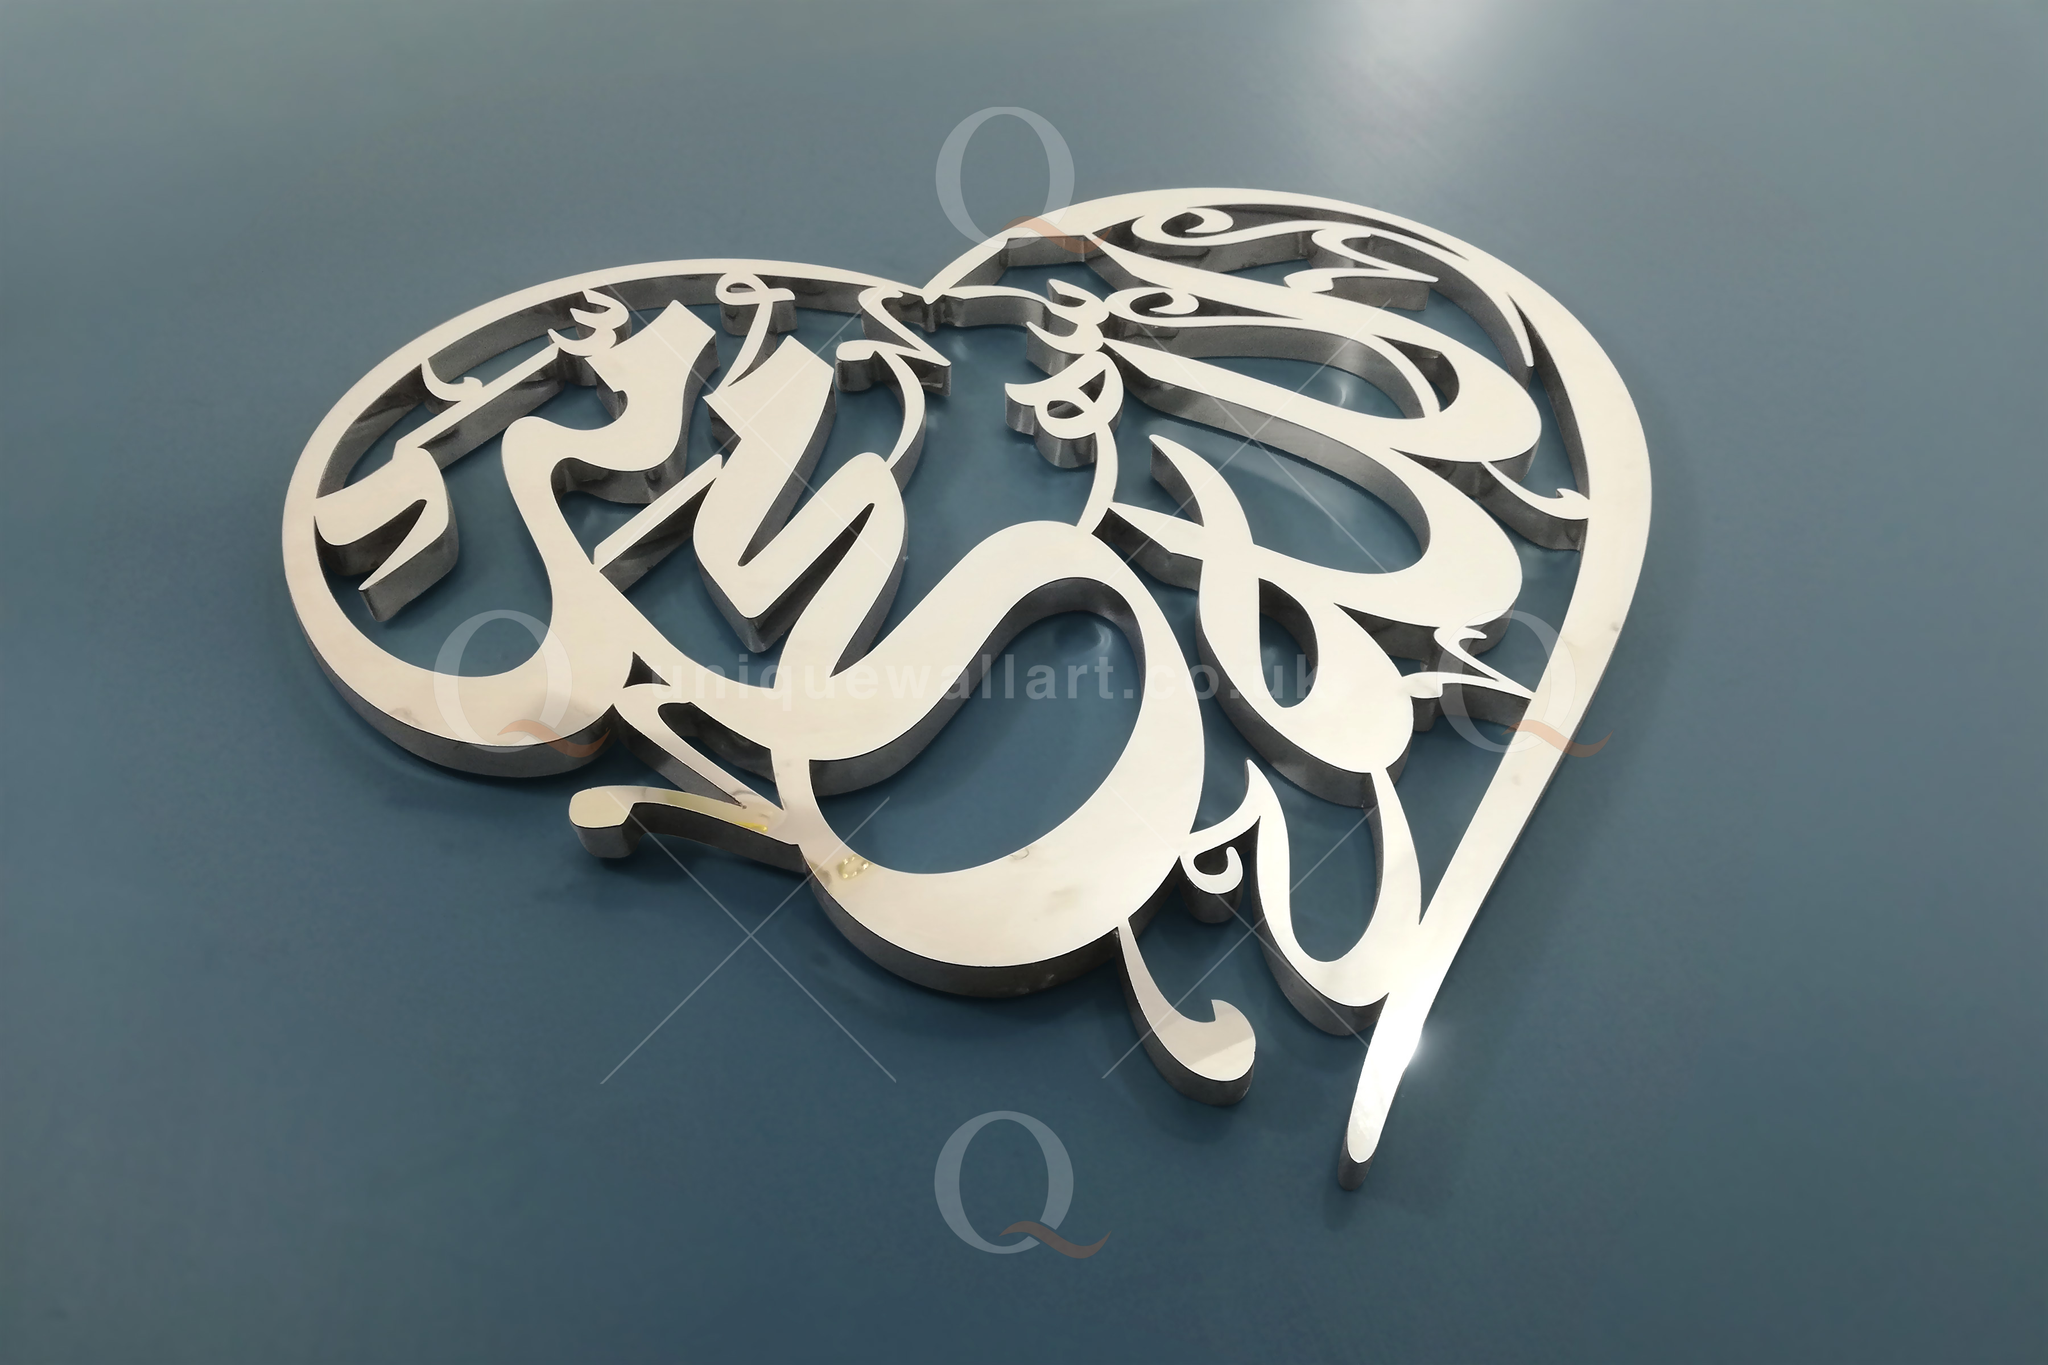 Allah Muhammad Heart Shape Islamic calligraphy Wall Art